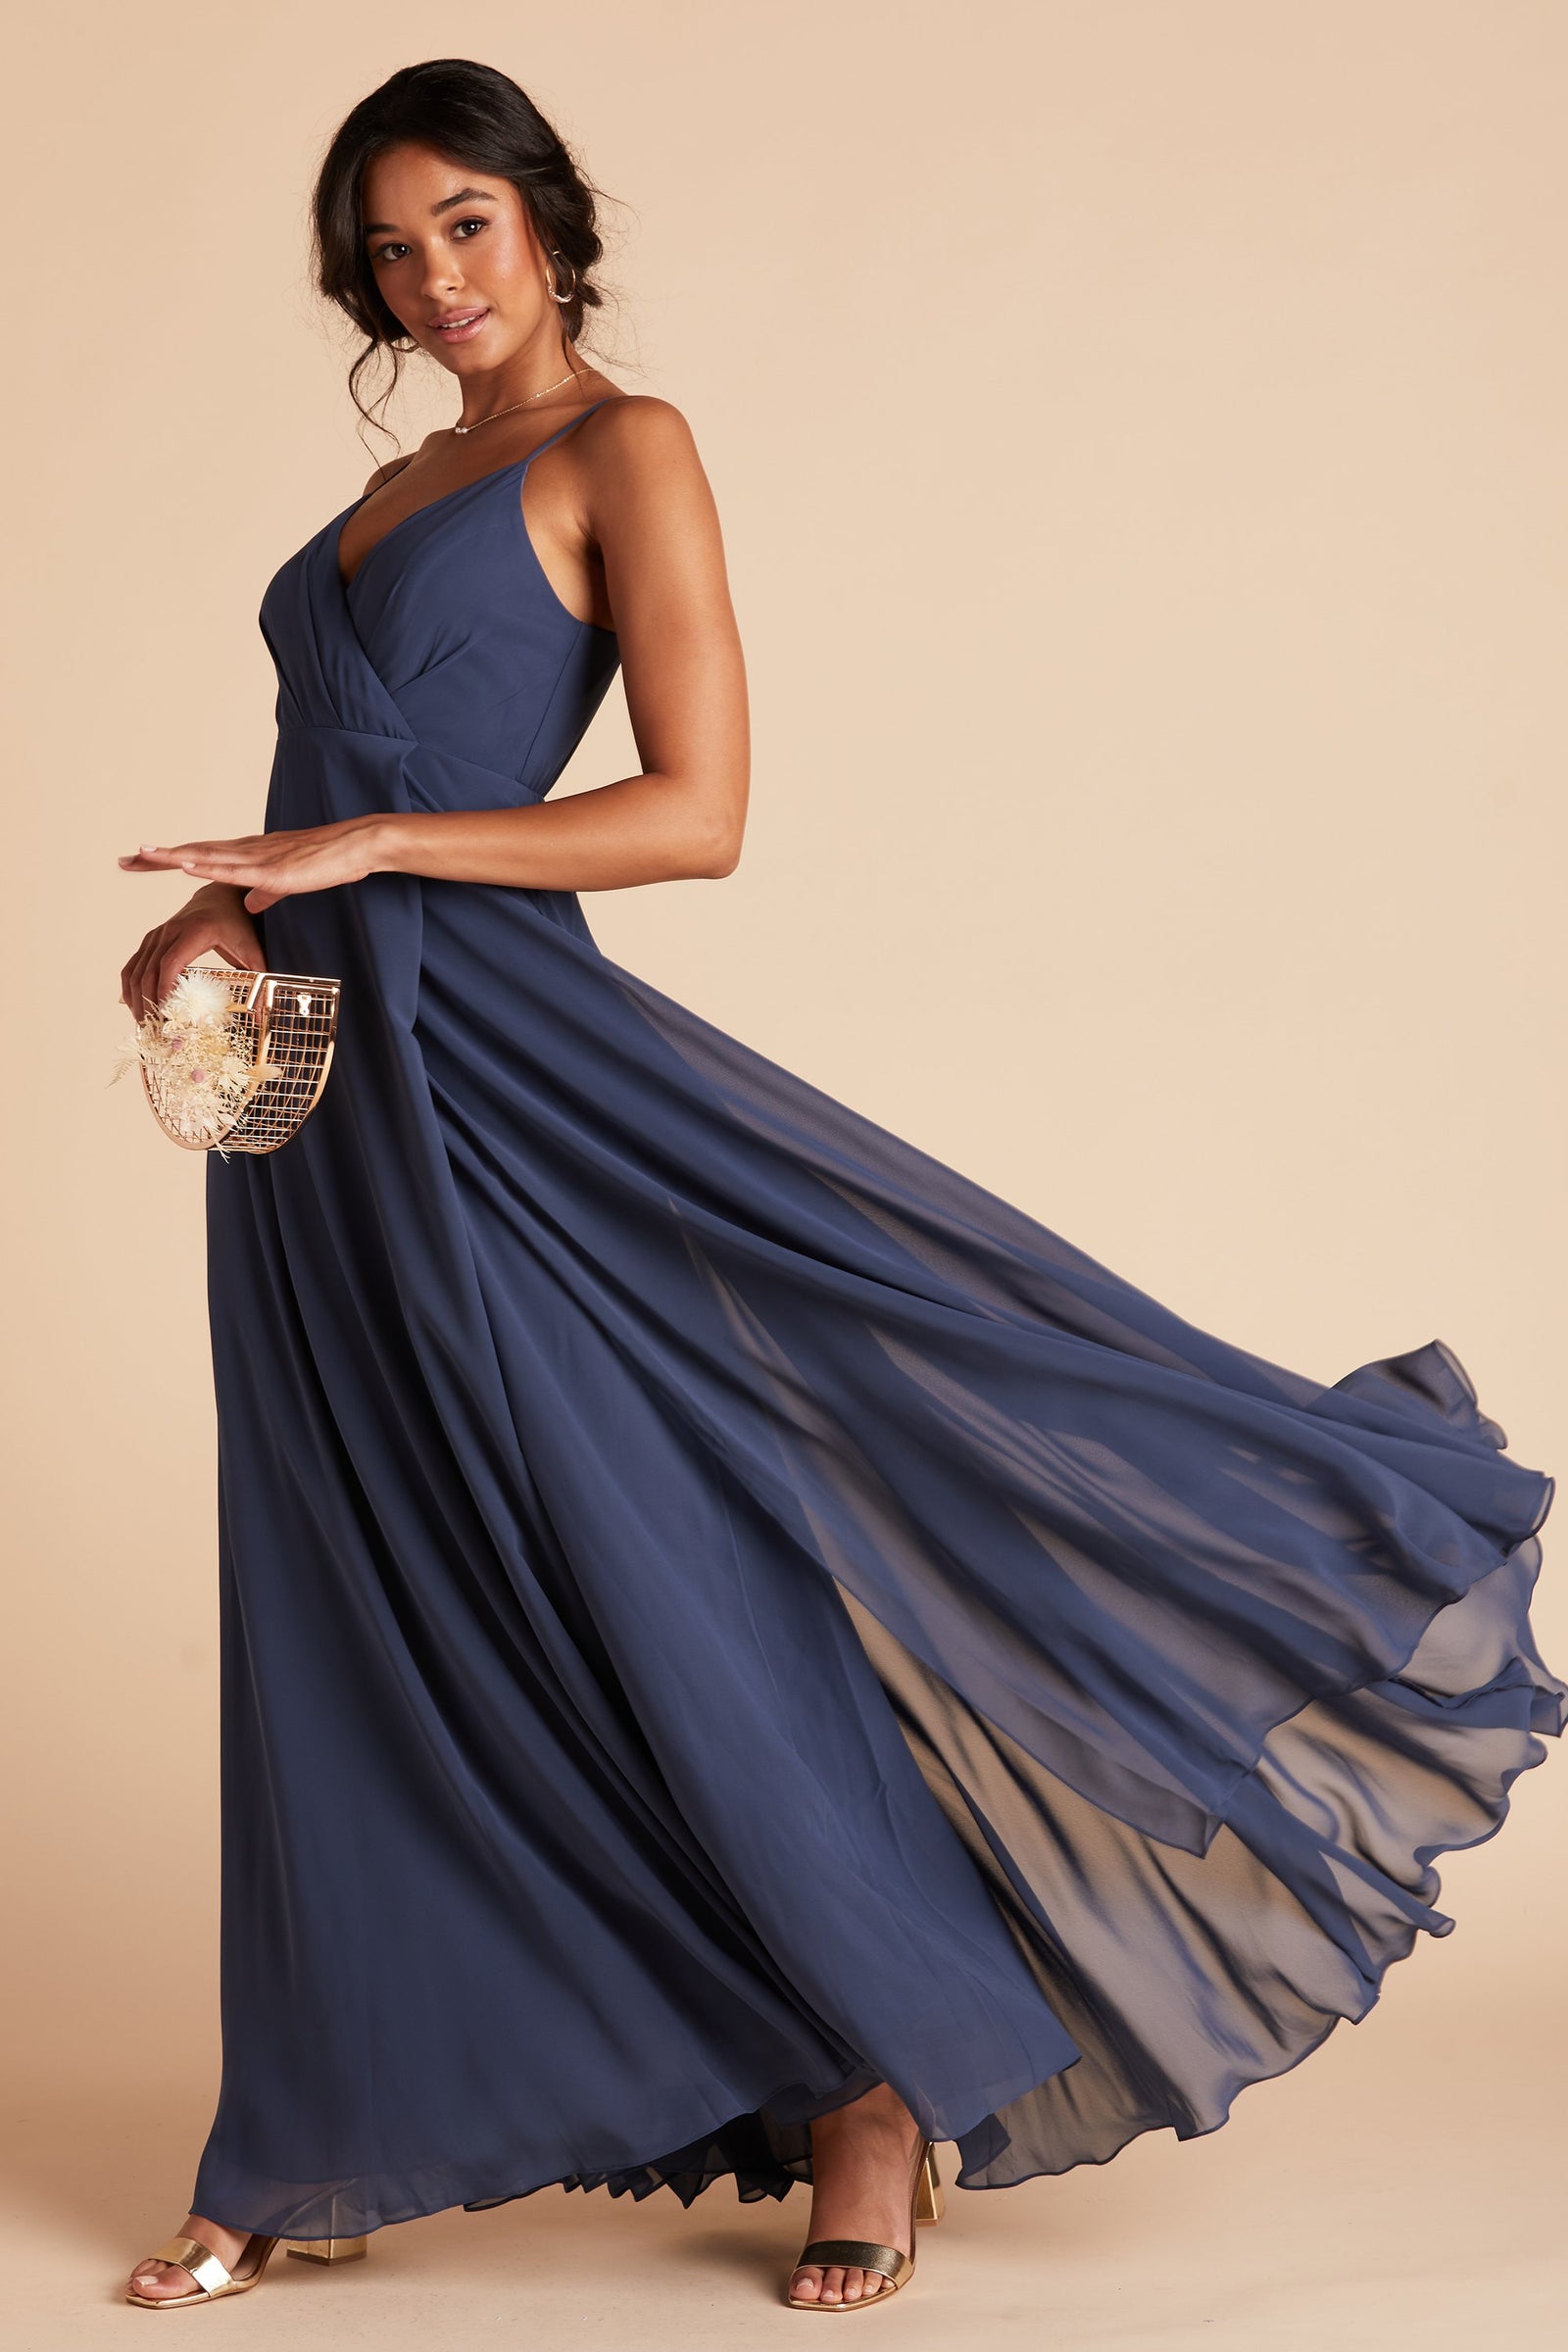 Slate Blue Bridesmaid Dresses - Shop ...